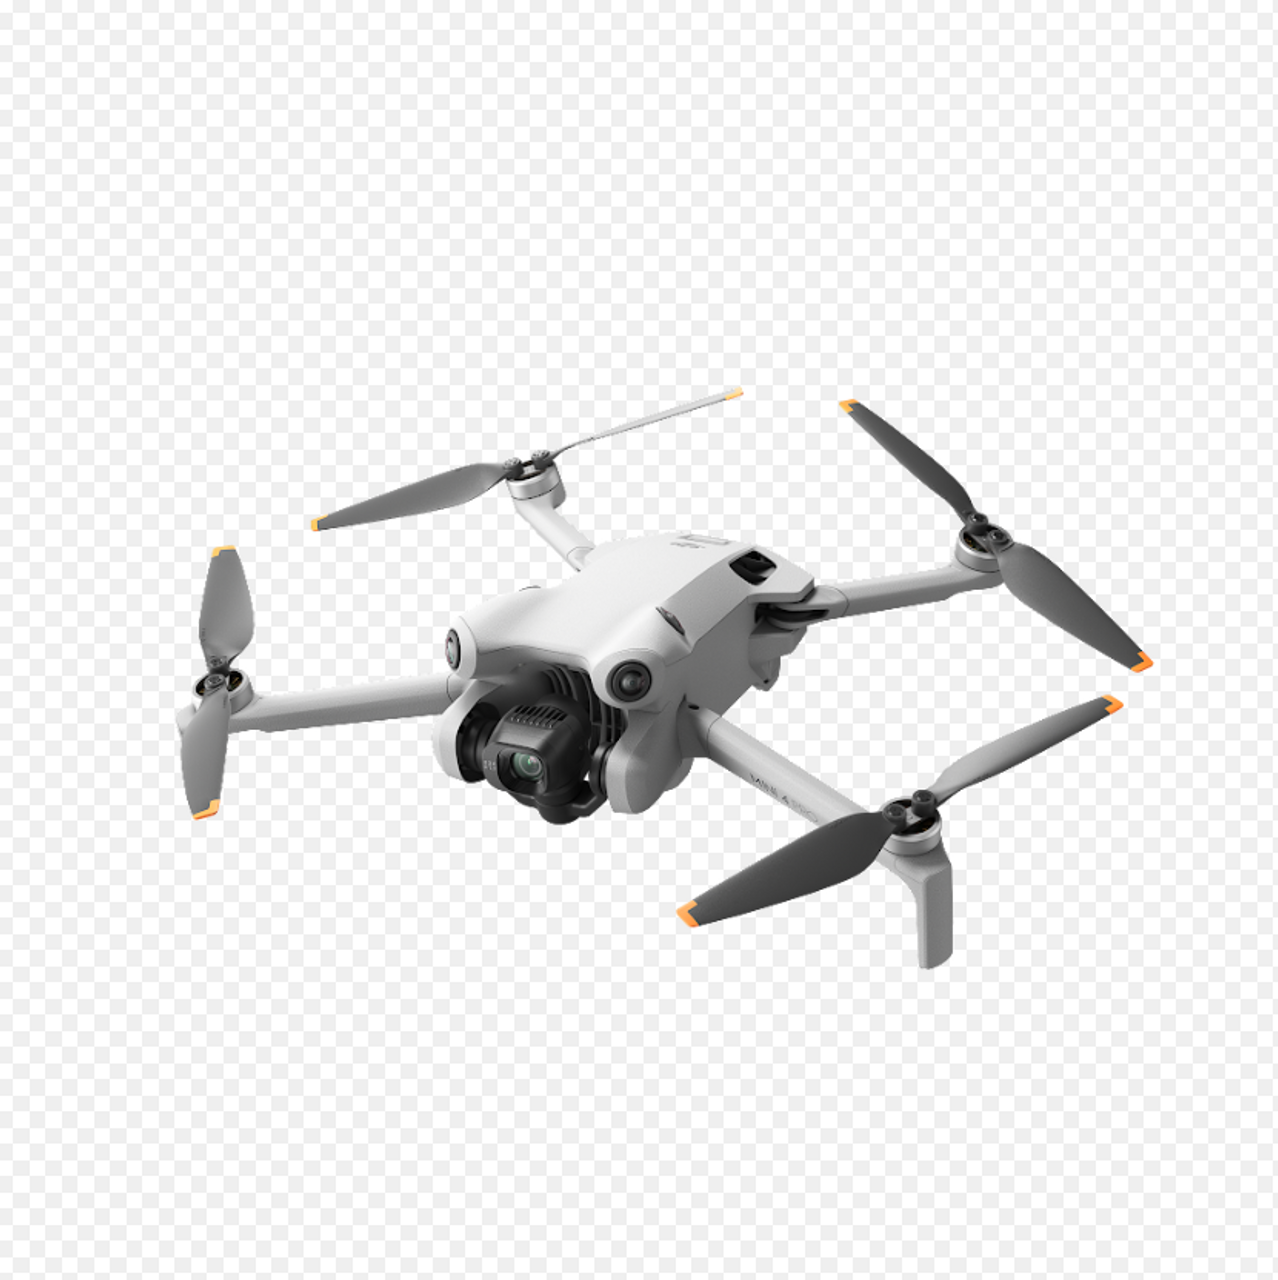 DJI Mini 2 Fly More Combo, DJI Drones